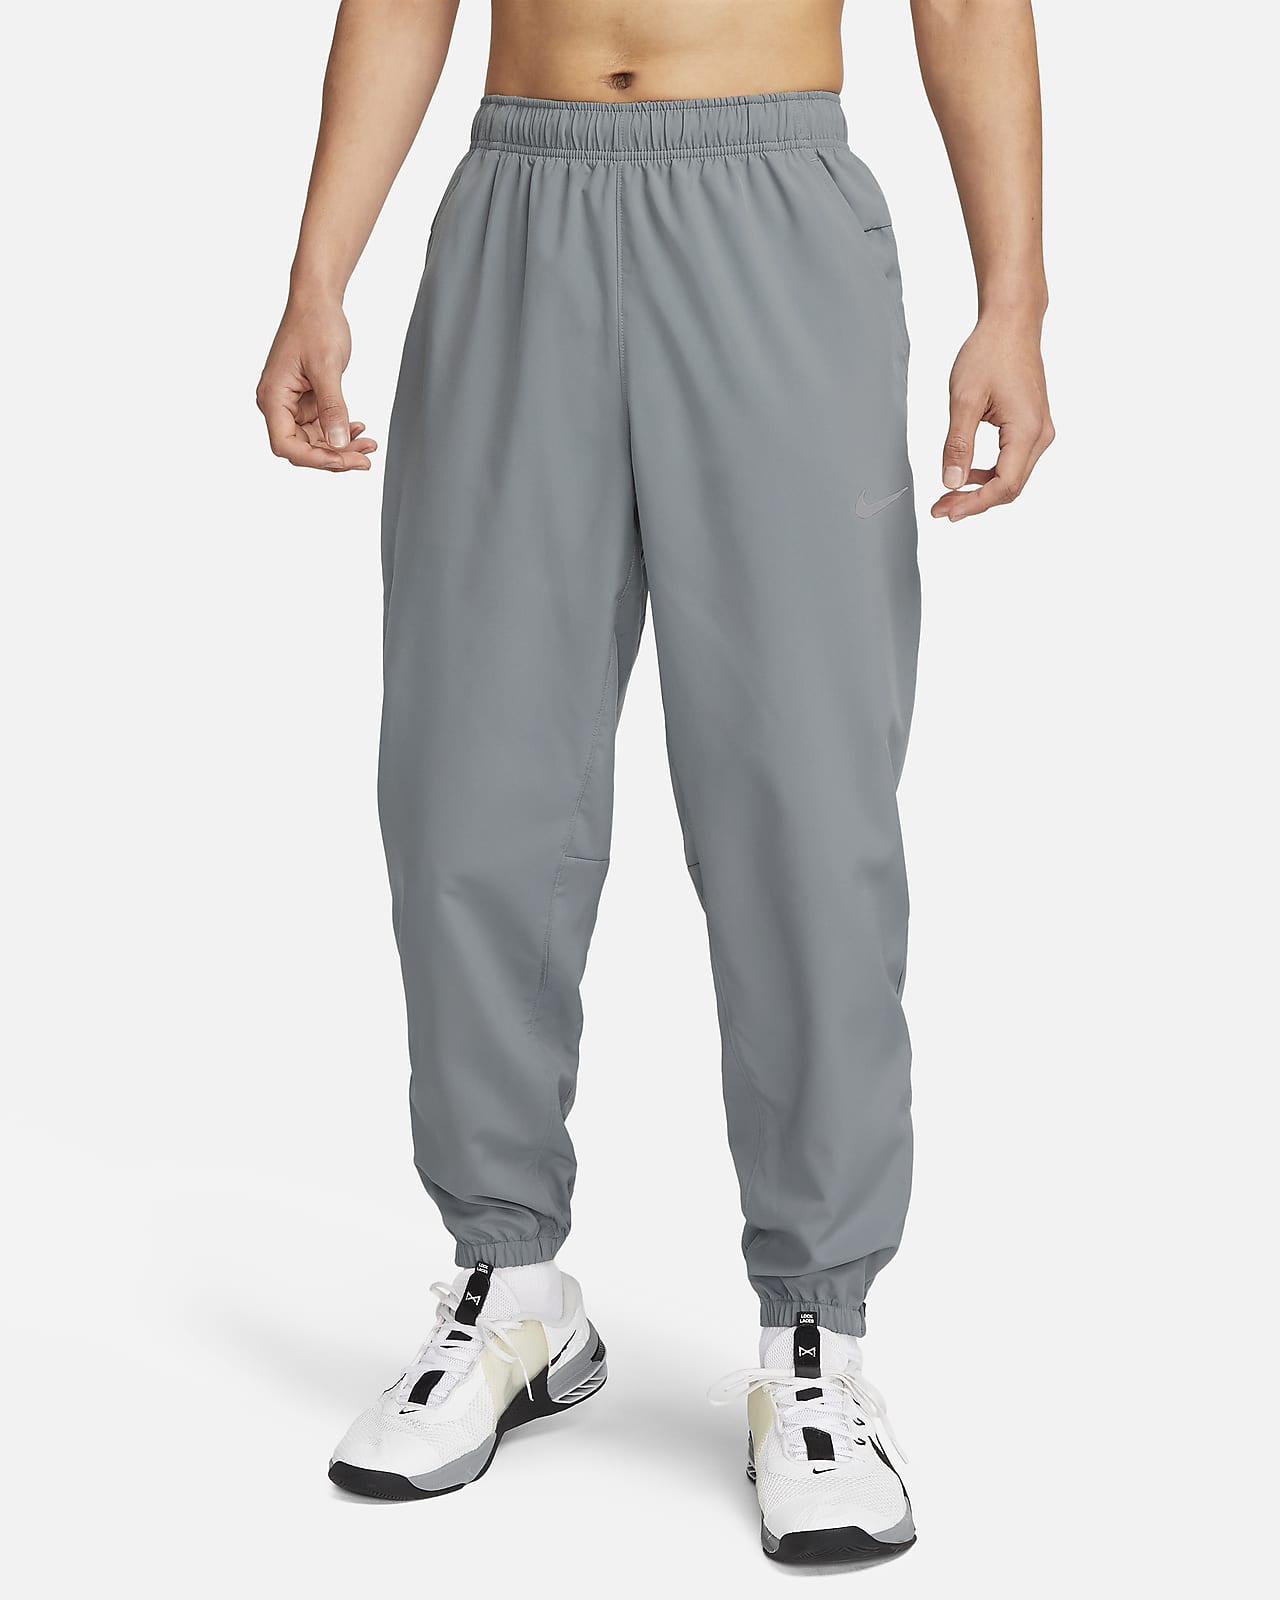 Pants Dri-FIT entallados versátiles para hombre Nike Form